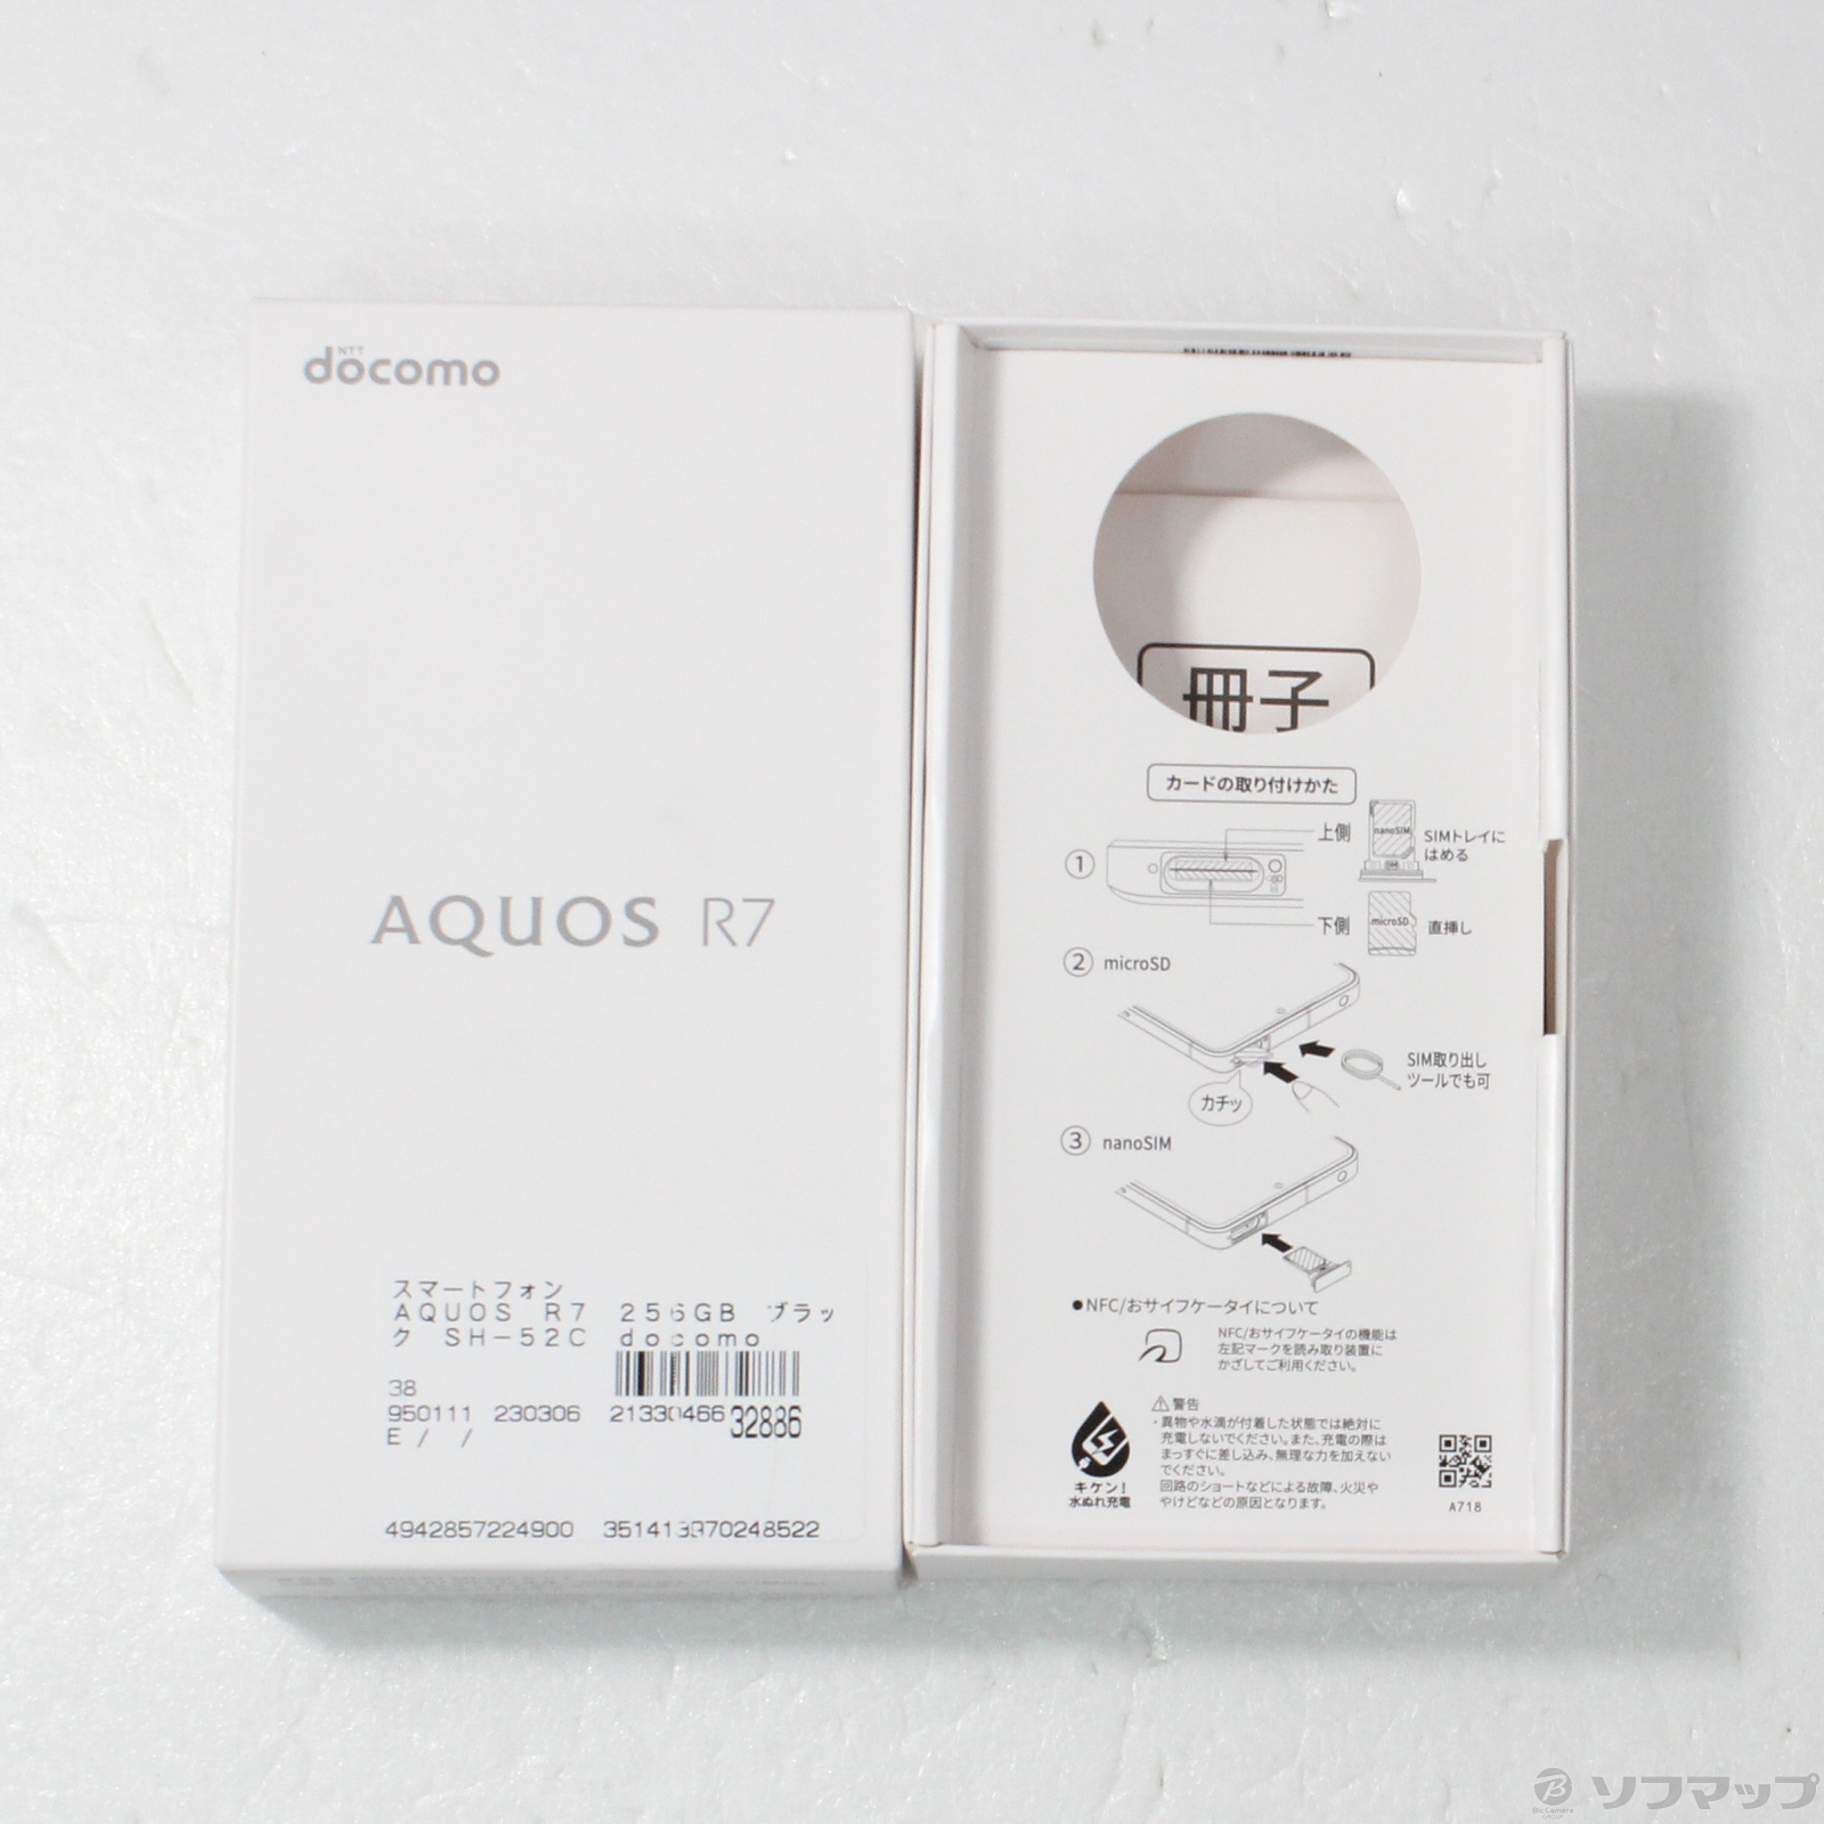 AQUOS R7 ブラック 256 GB SiMフリー